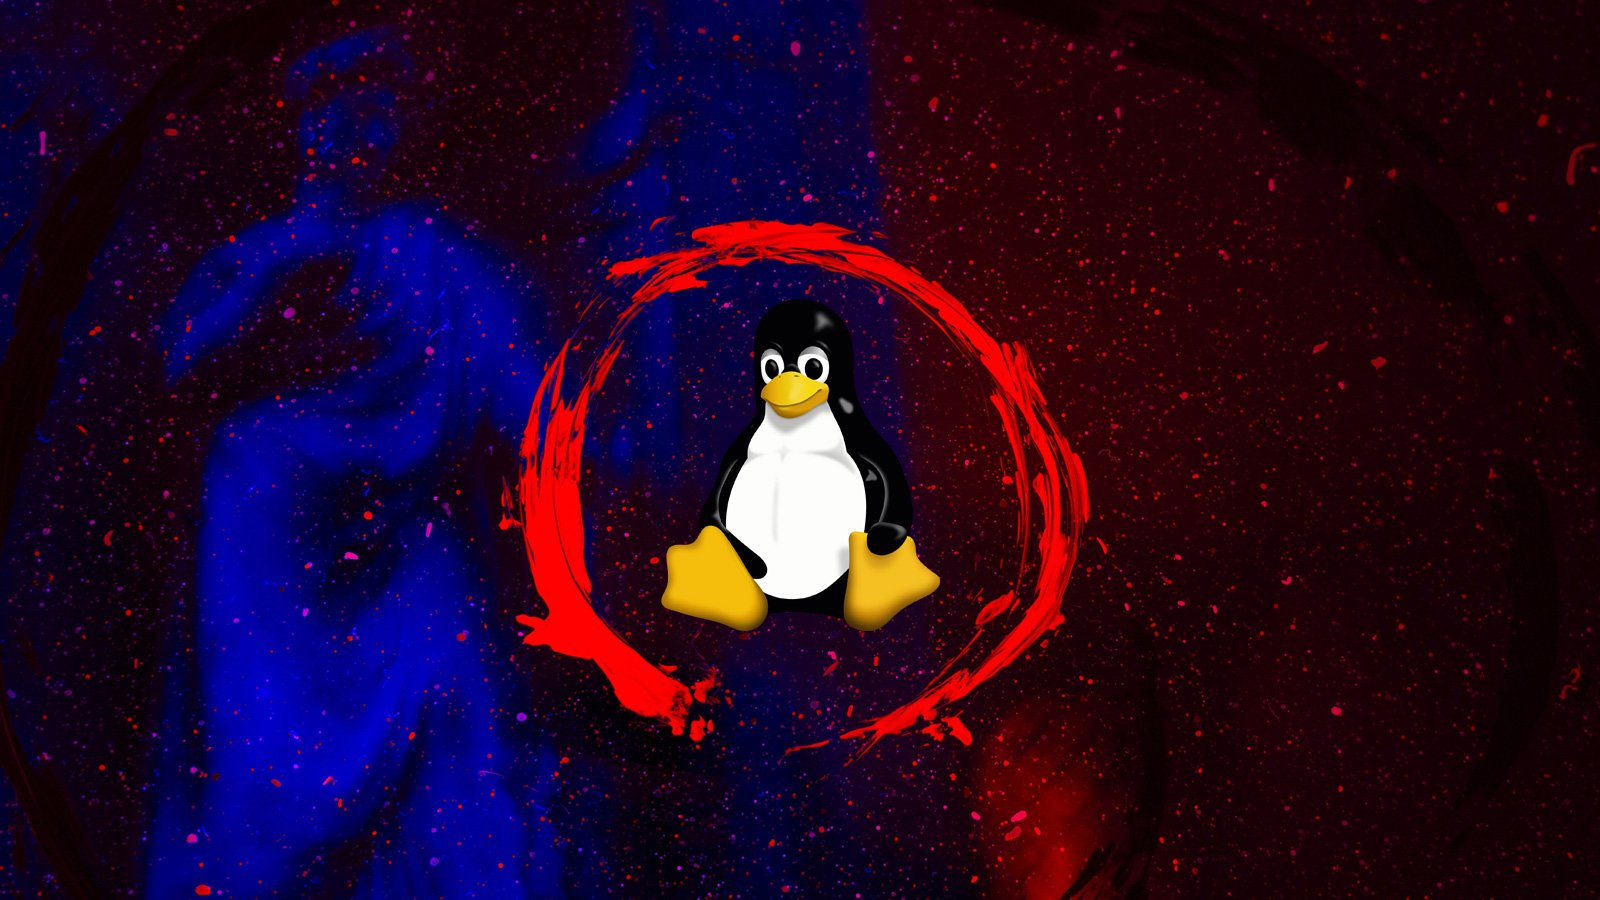 linux-security-headpic.jpg